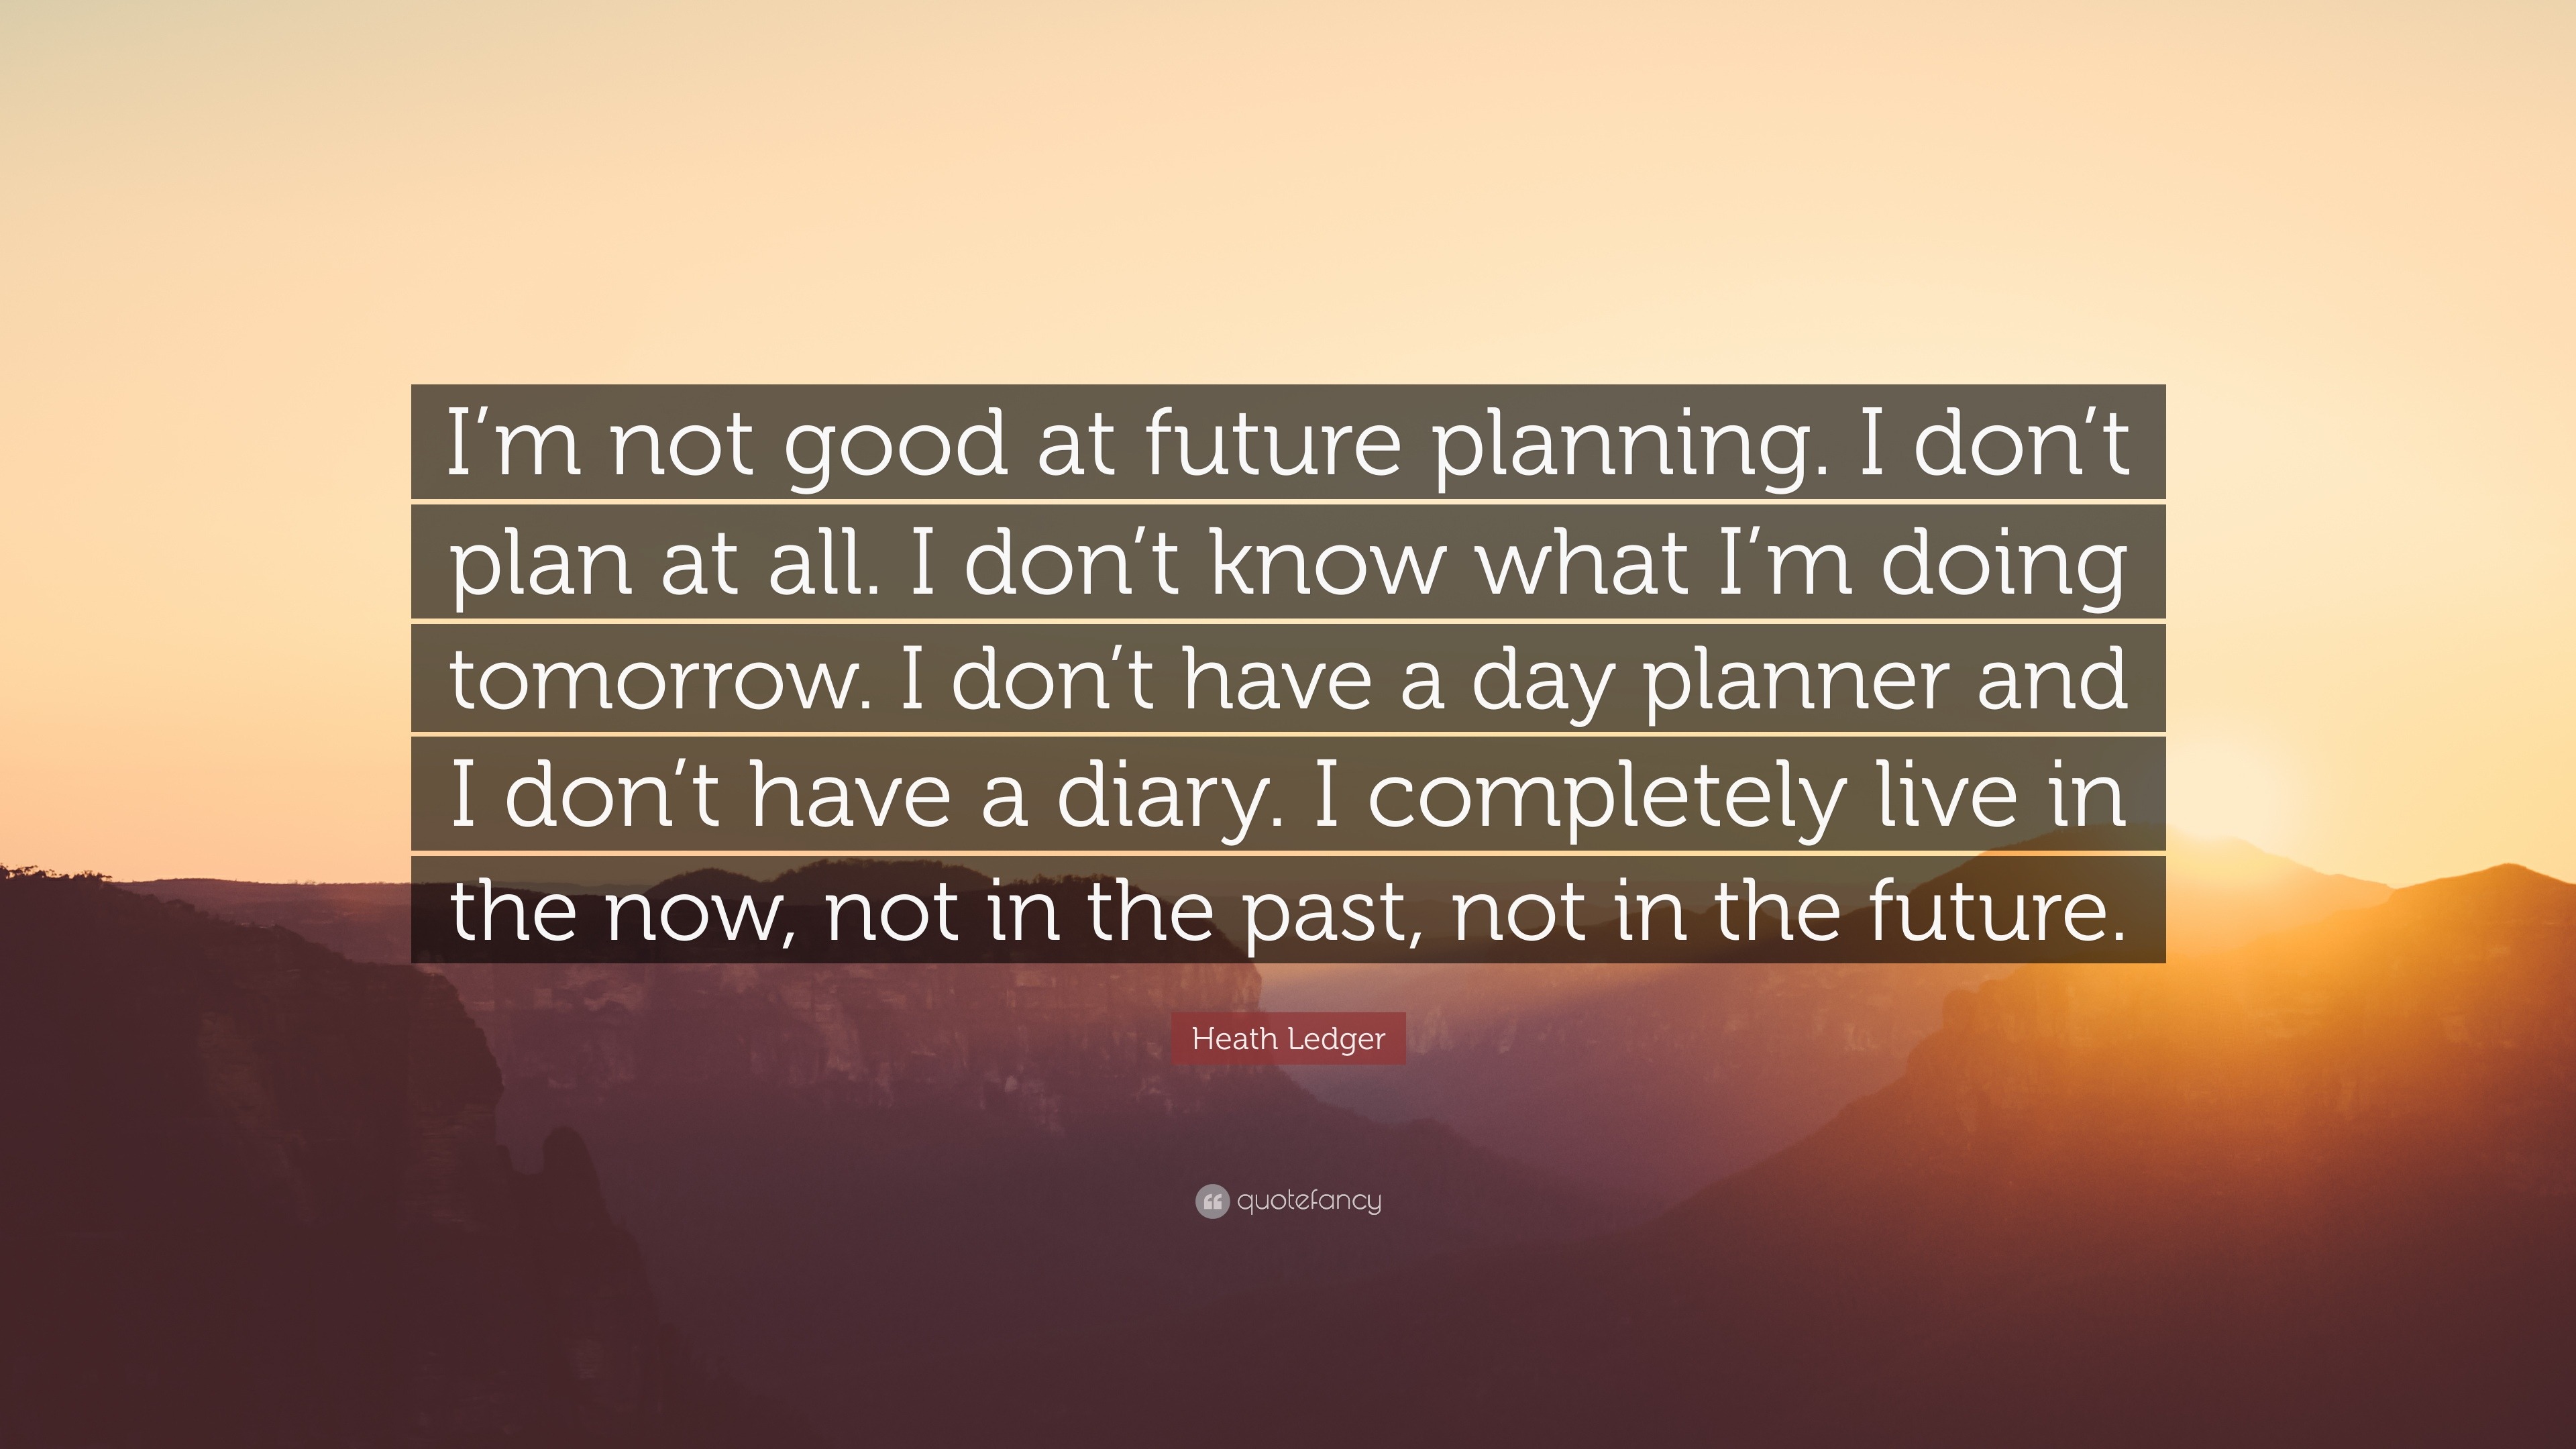 Heath Ledger Quote “I’m not good at future planning. I